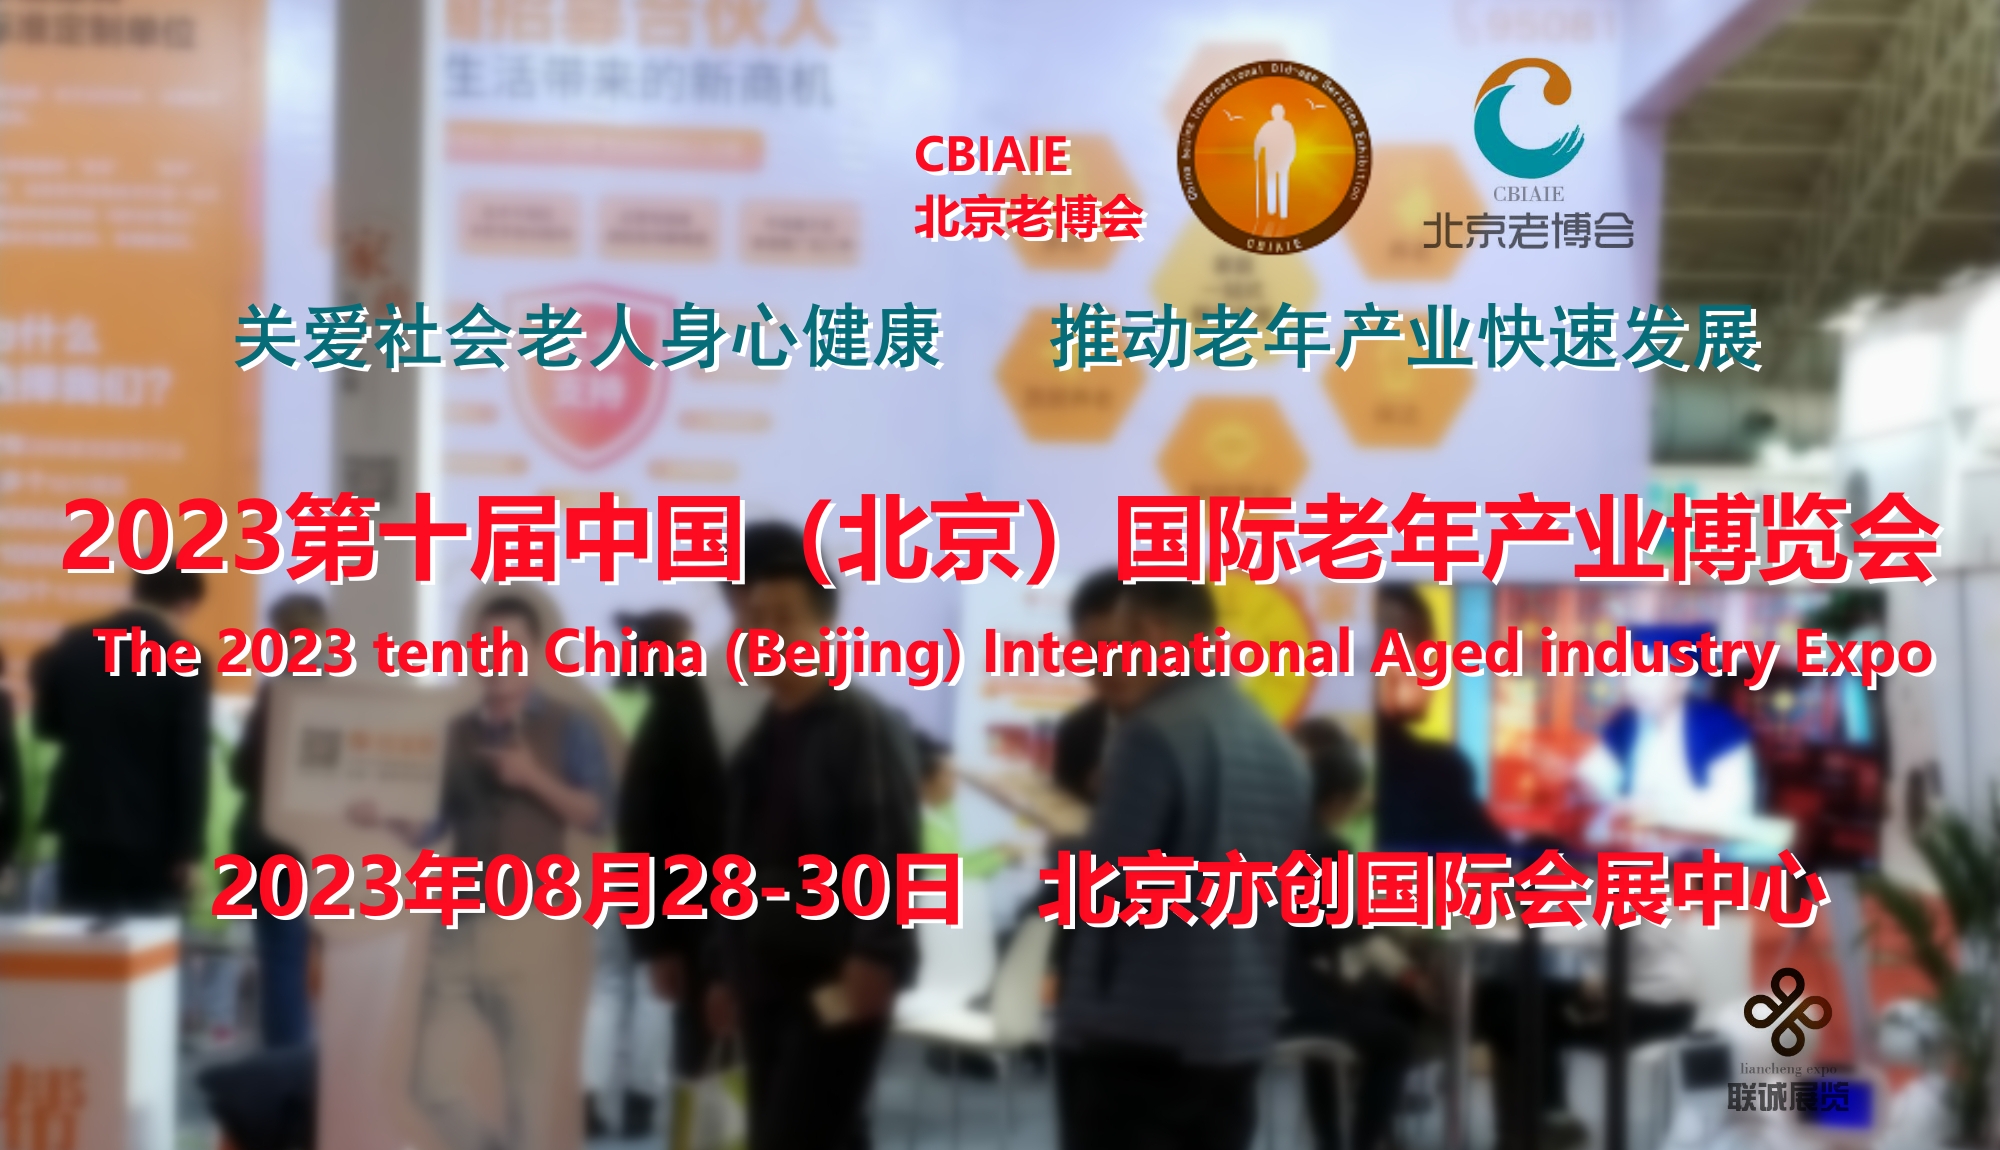 CBIAIE北京老博会，第十届北京国际老年产业博览会即将开幕